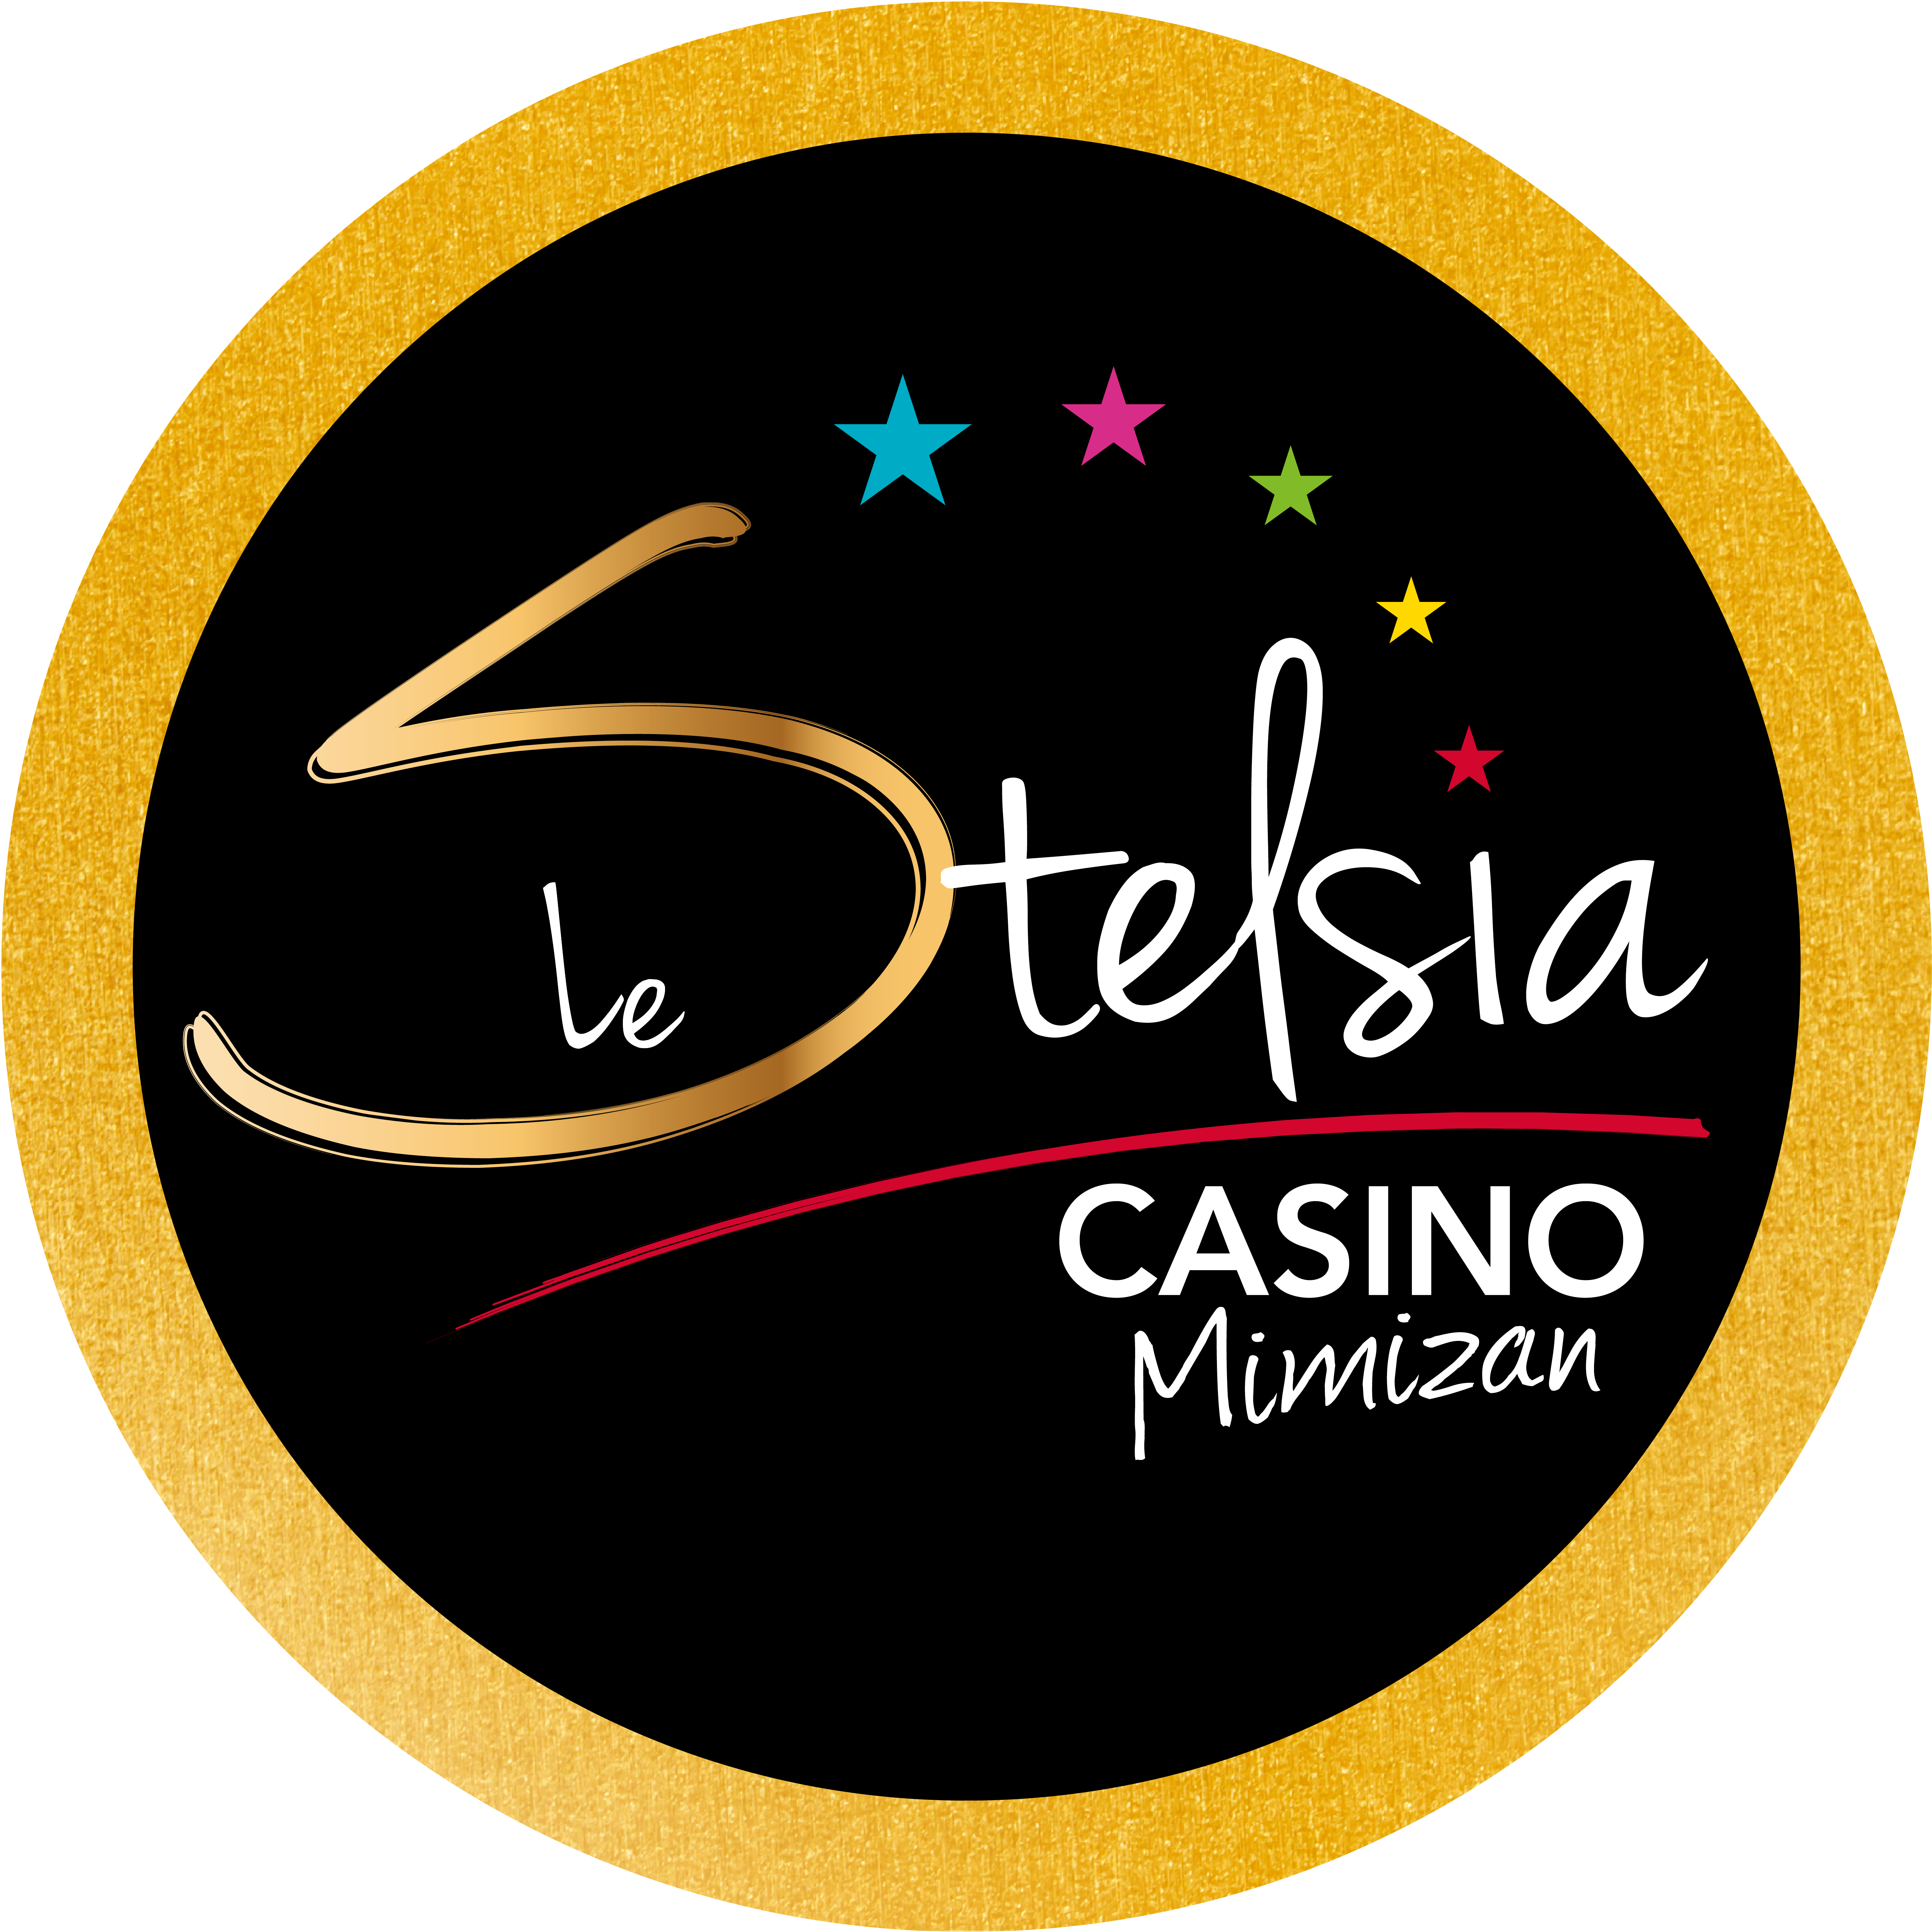 Casino Stelsia